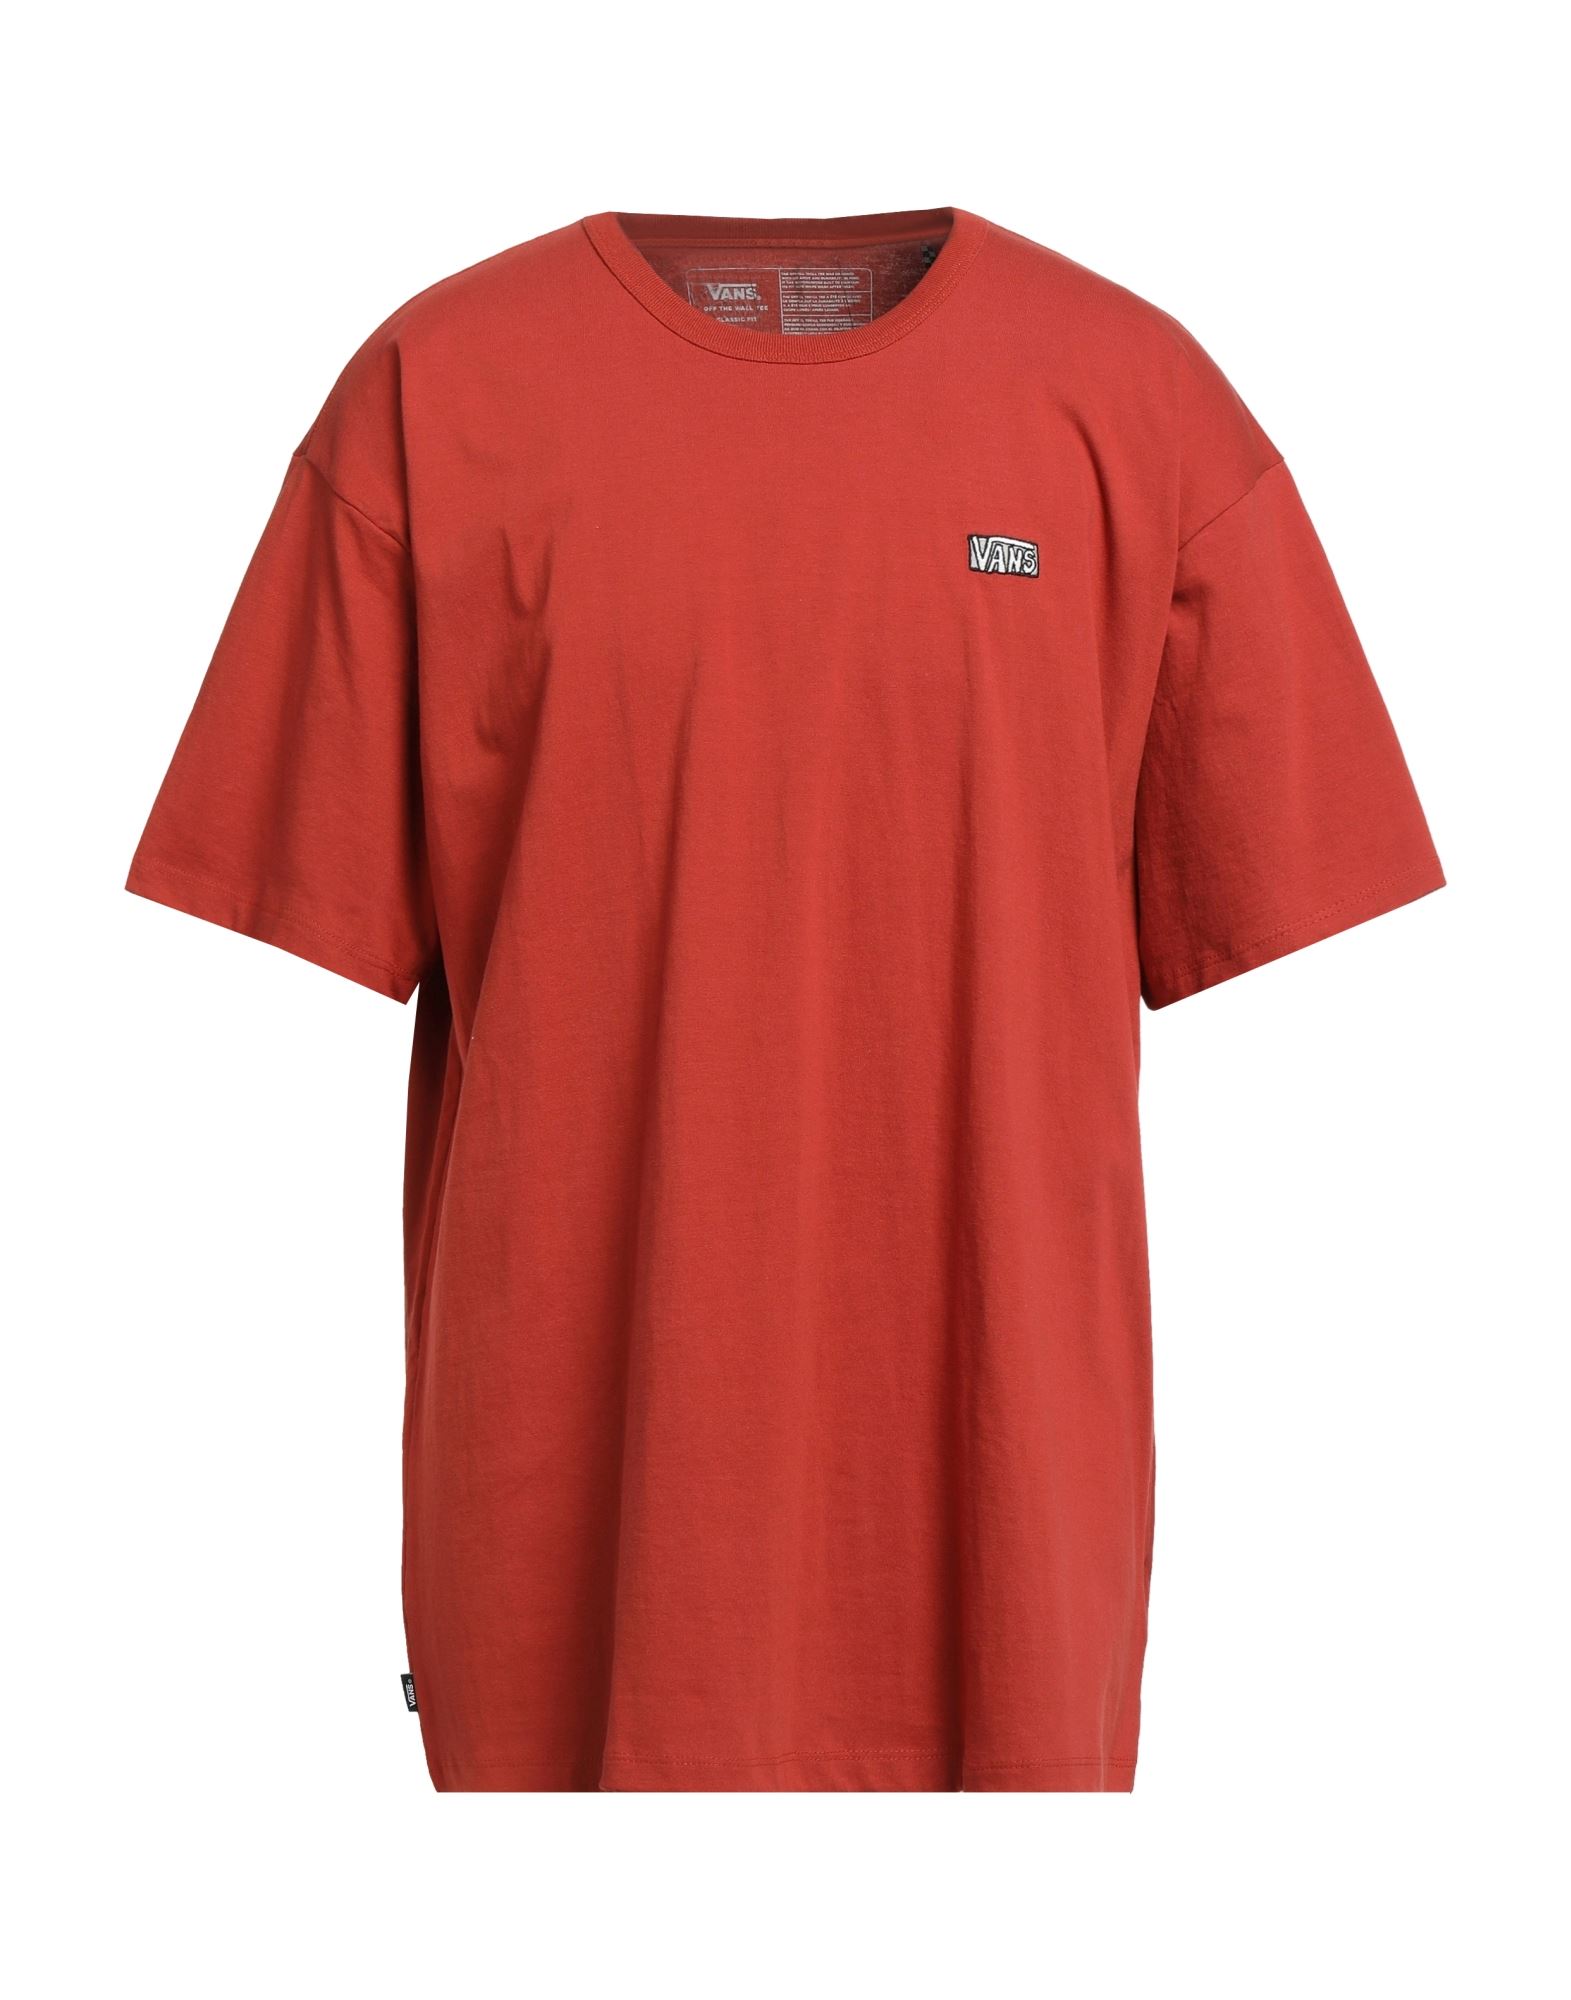 Vans Man T-shirt Rust Size Xl Cotton In Red